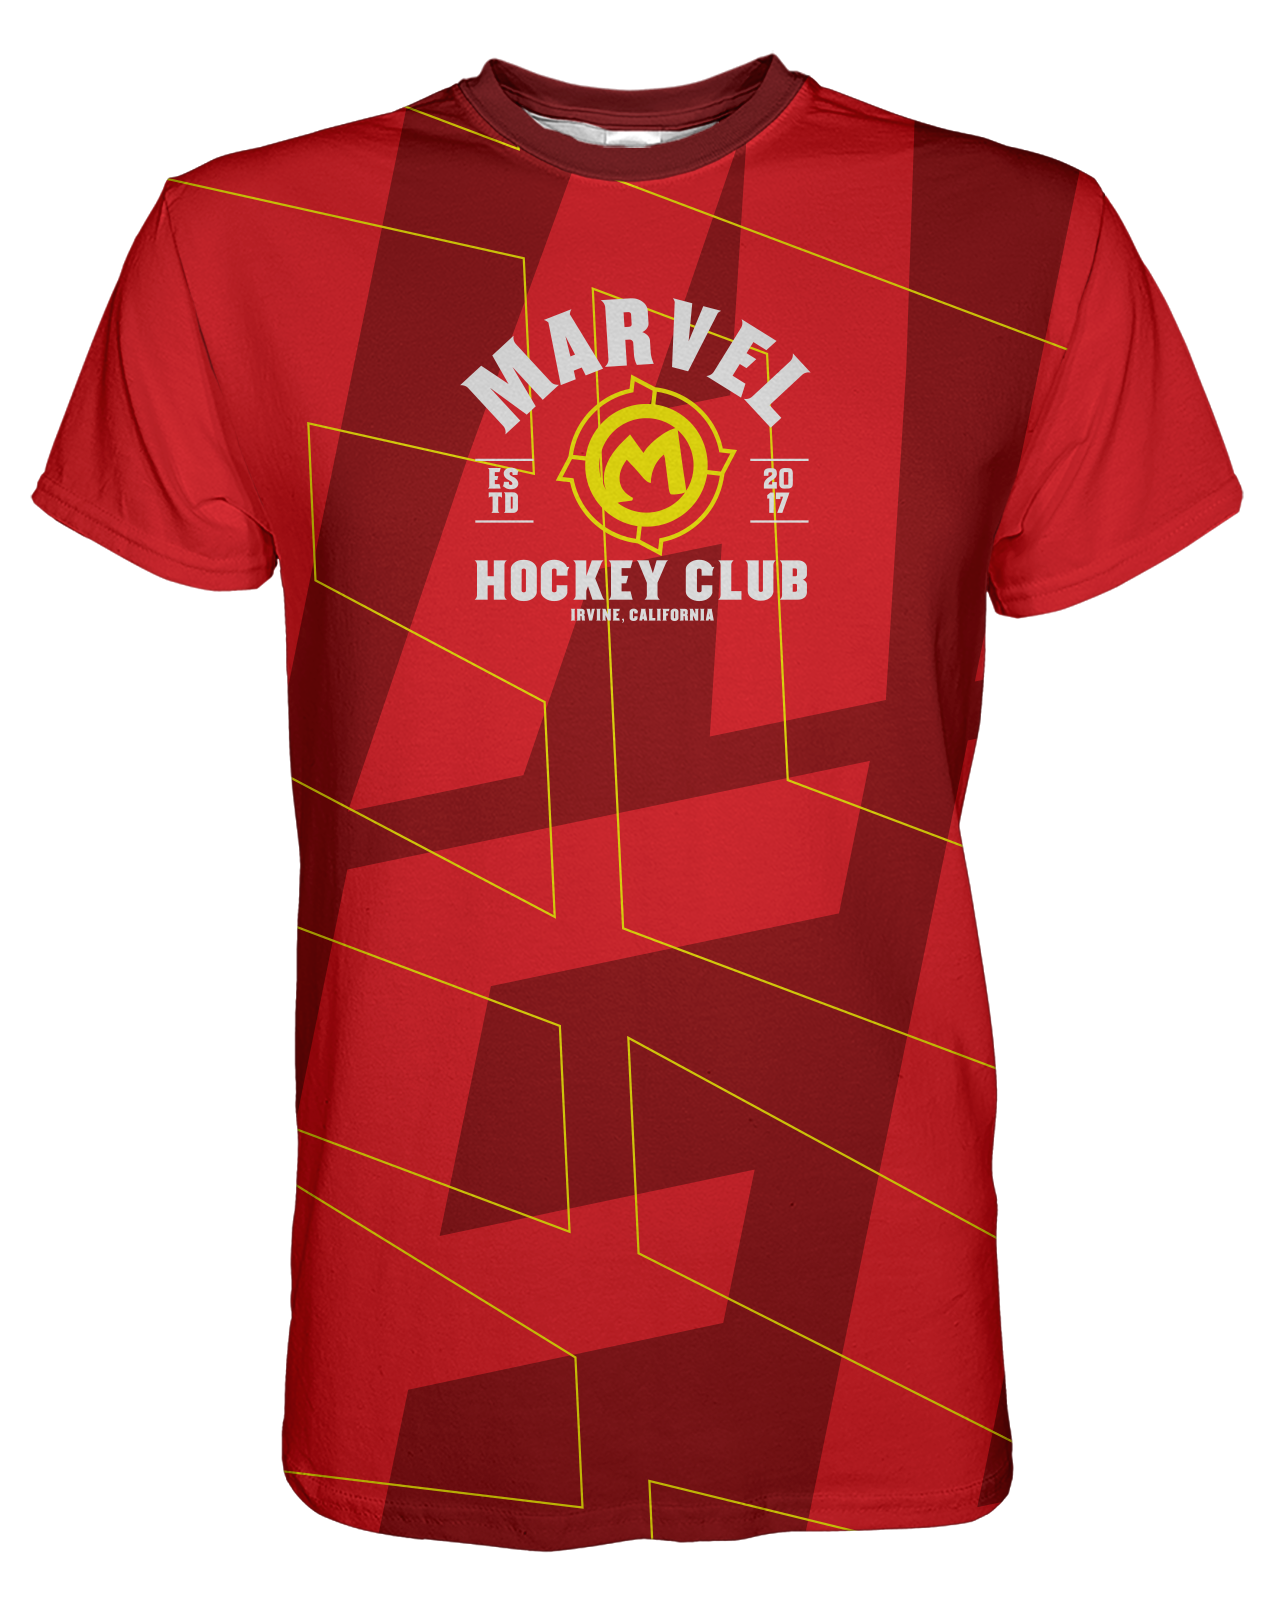 Marvel SoCal Mens T shirt product image